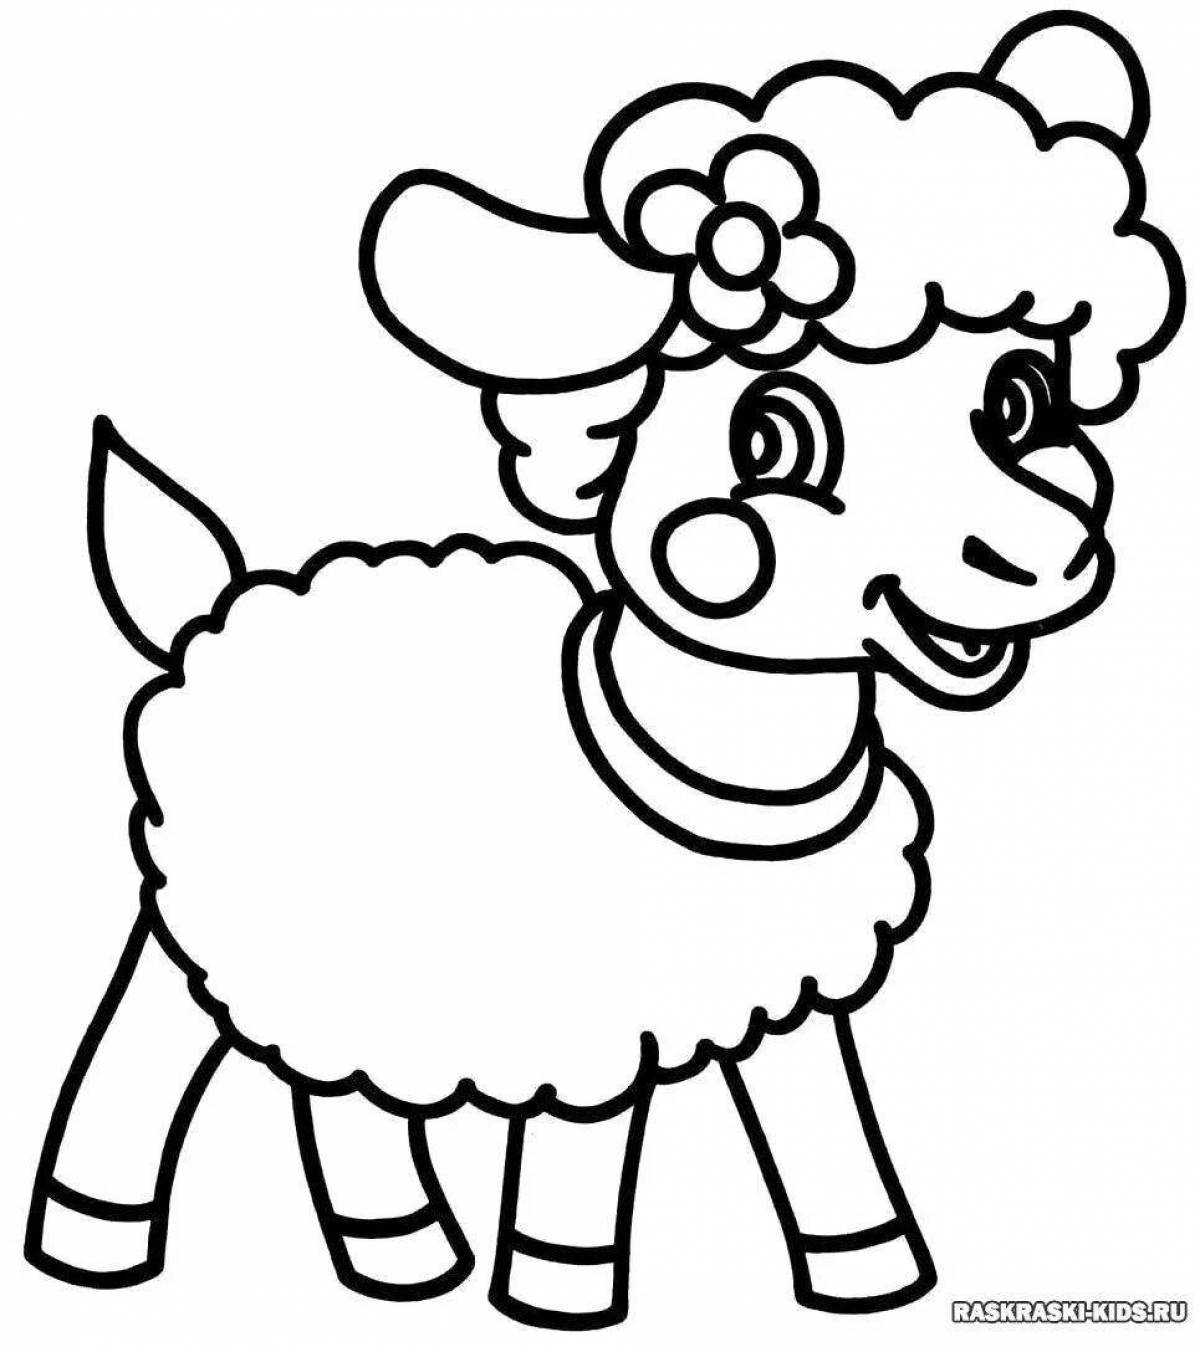 Affectionate lamb coloring